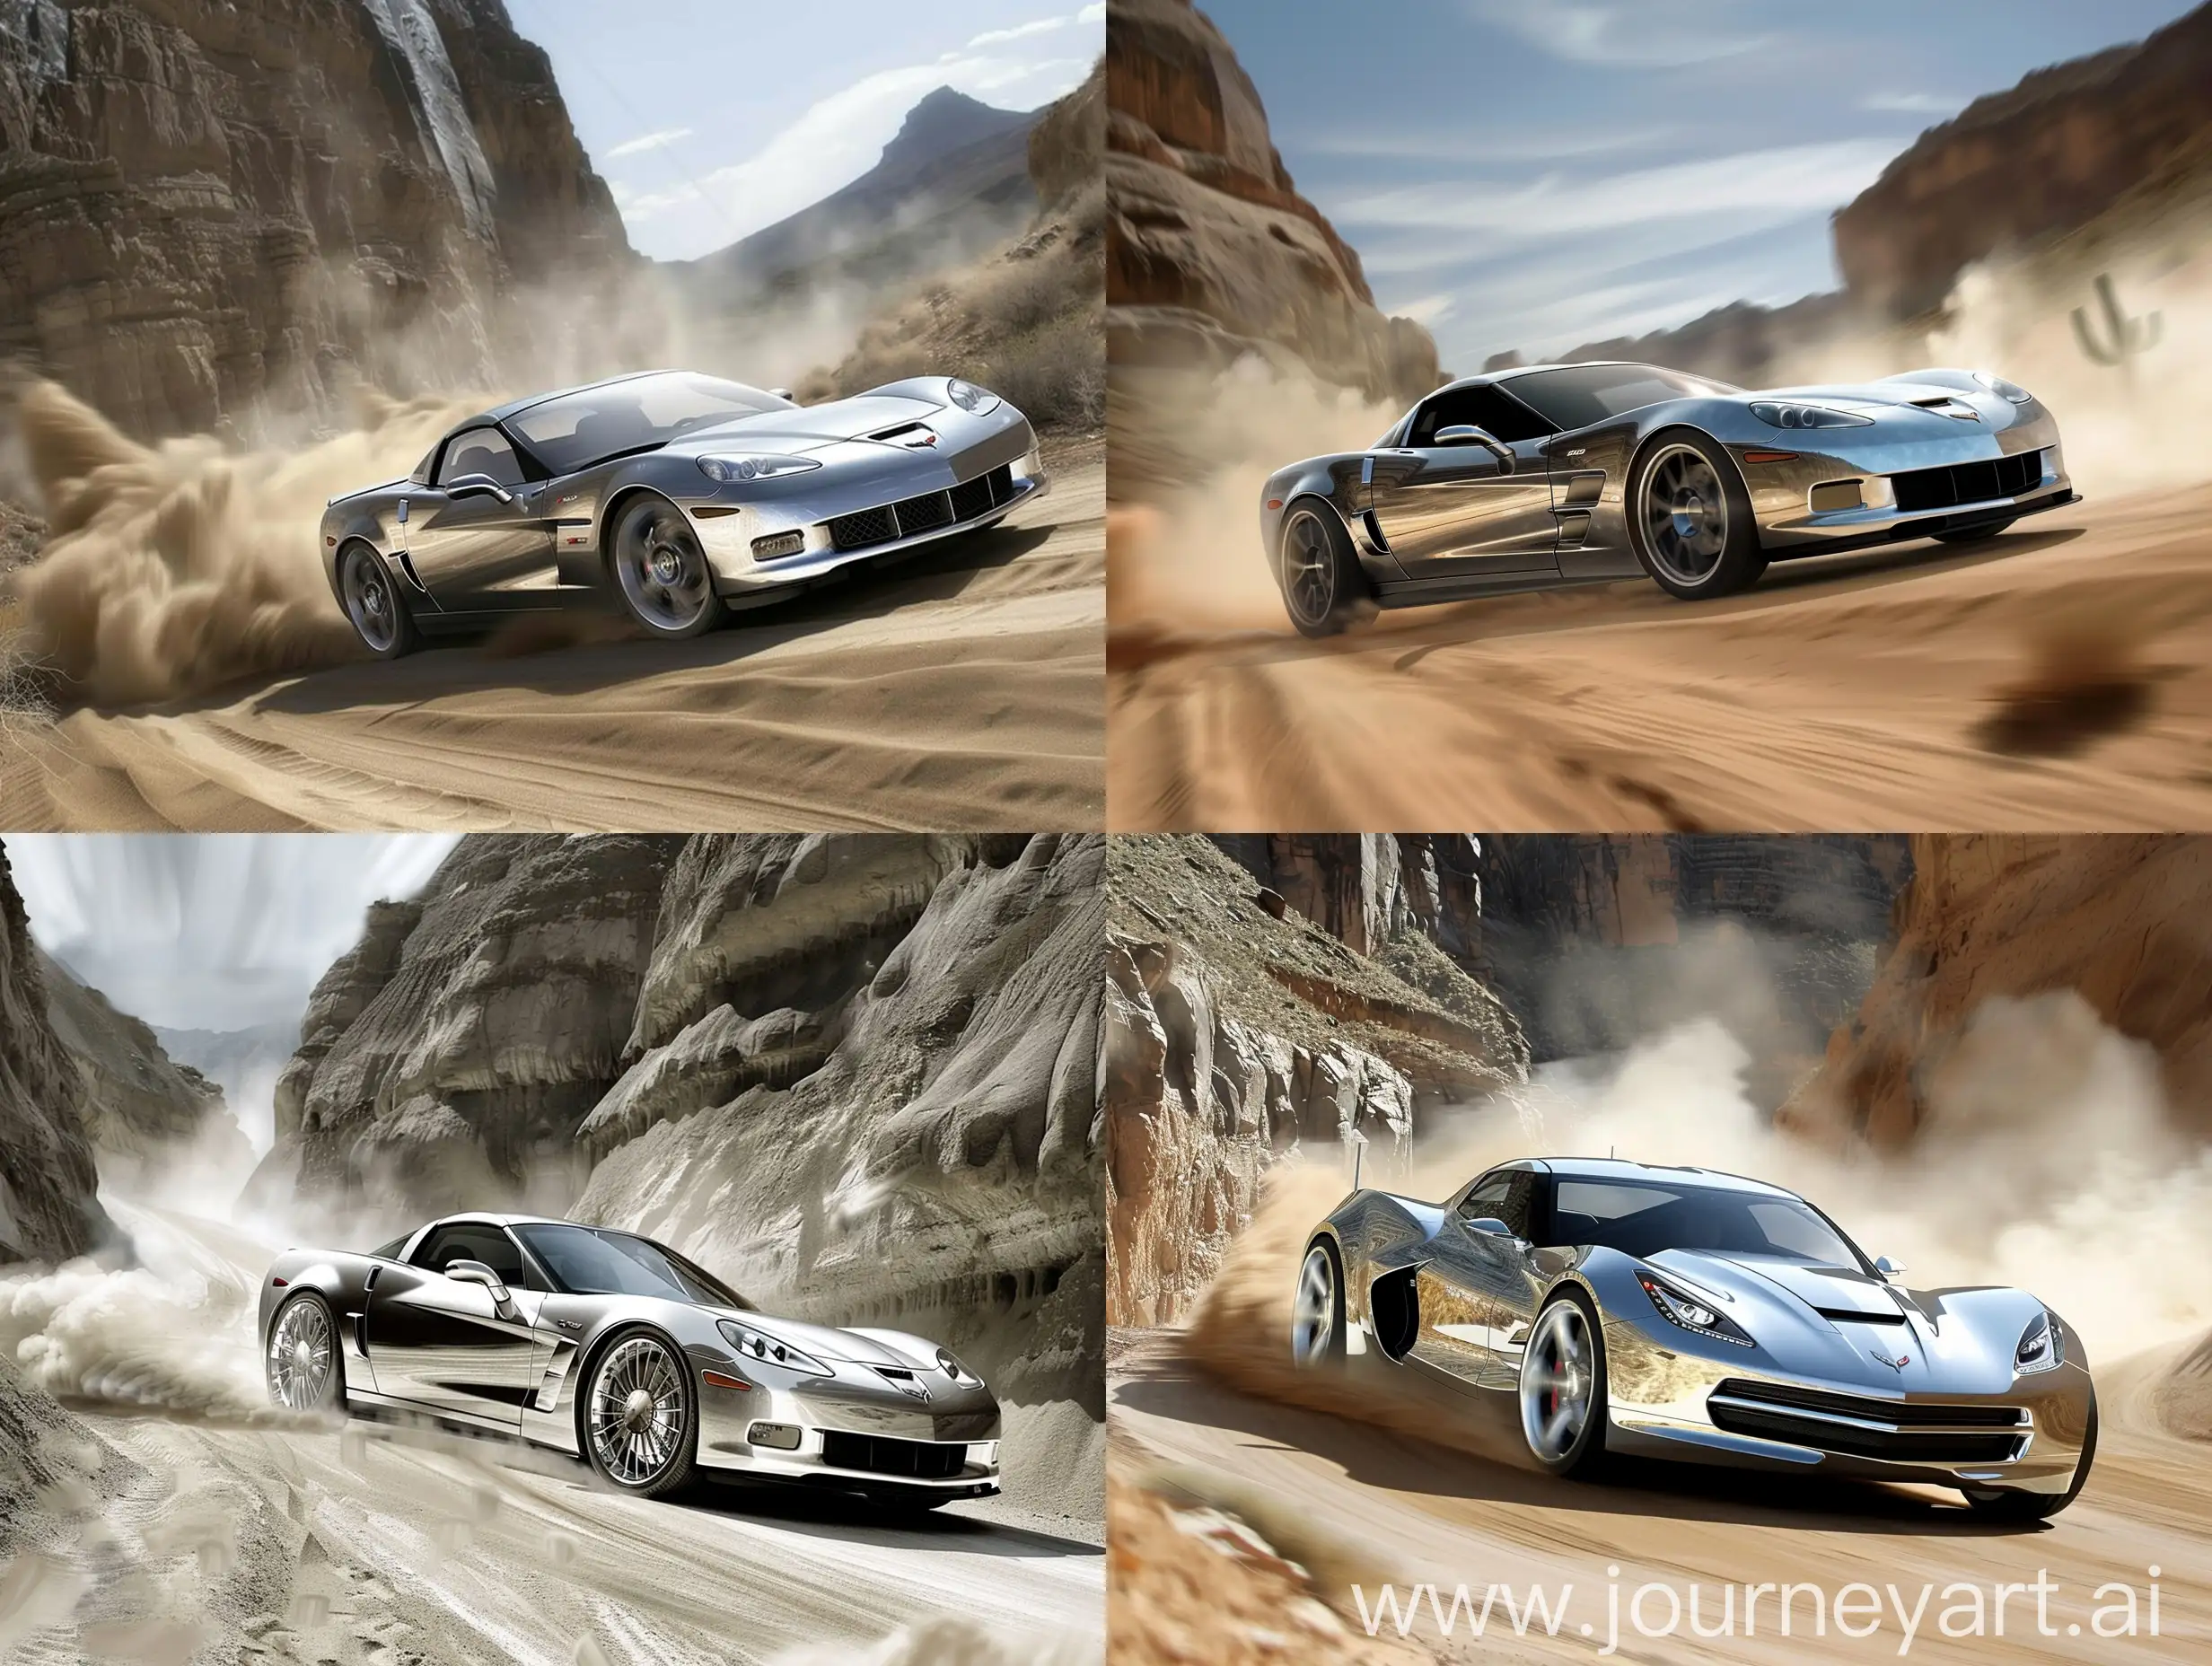 Speeding-2009-Chevrolet-Corvette-Stingray-Concept-in-Canyon-Dust-and-Smoke